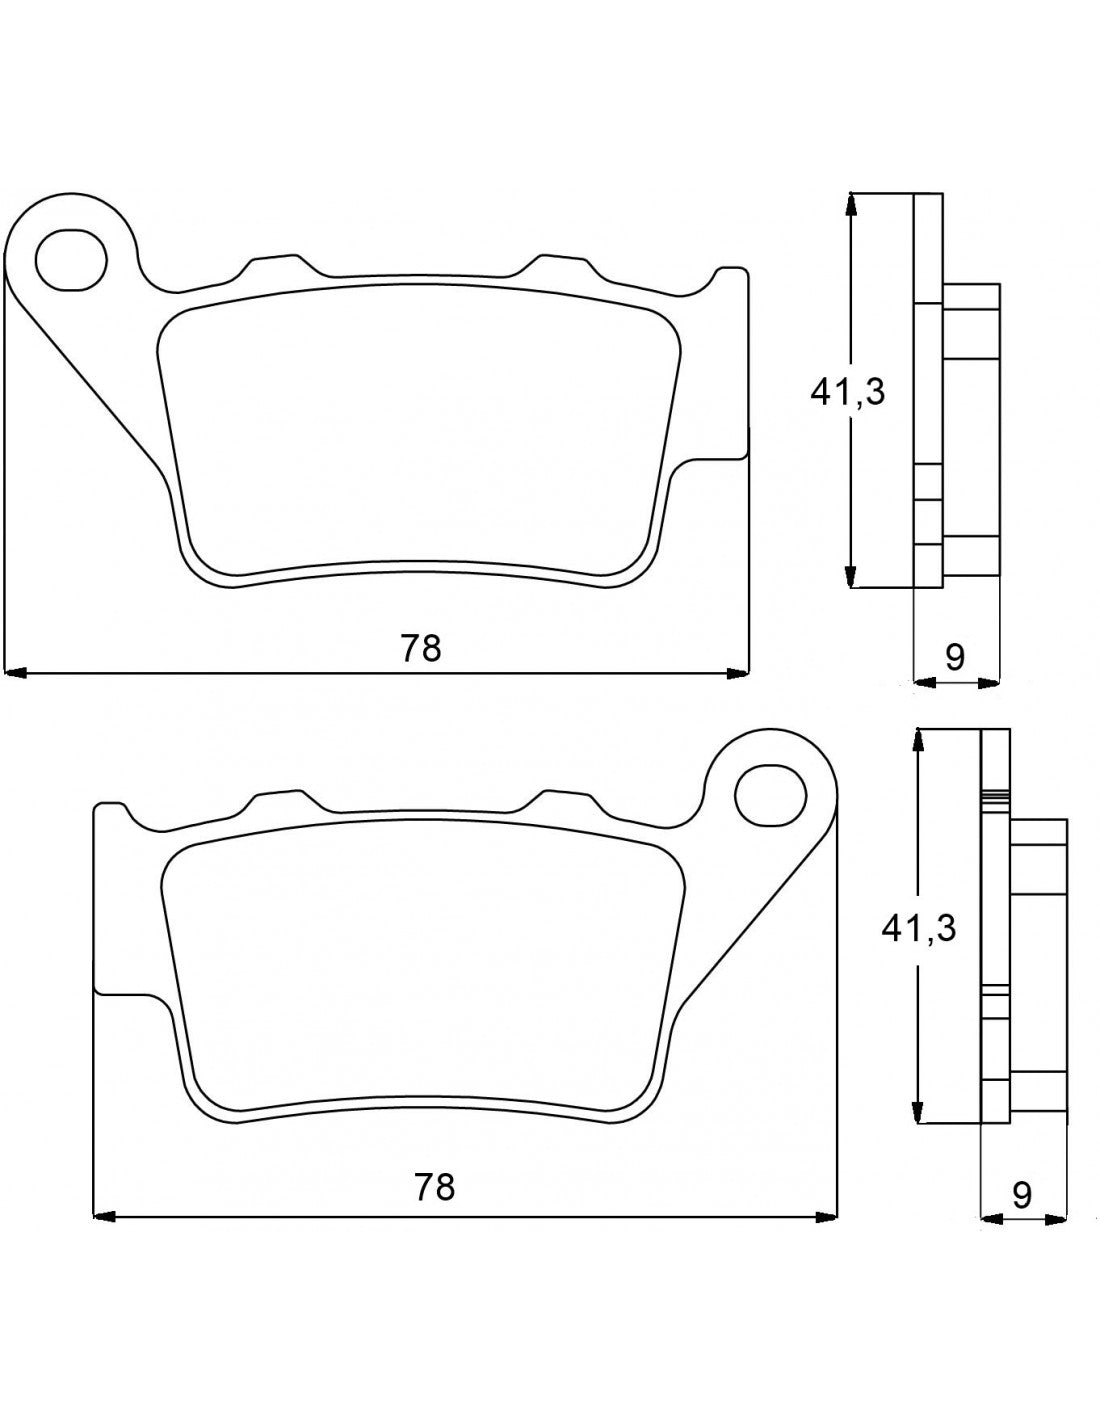 Accossato Brake Pads Kit For Motorcycle, AGPP91ST (Rear) Accossato